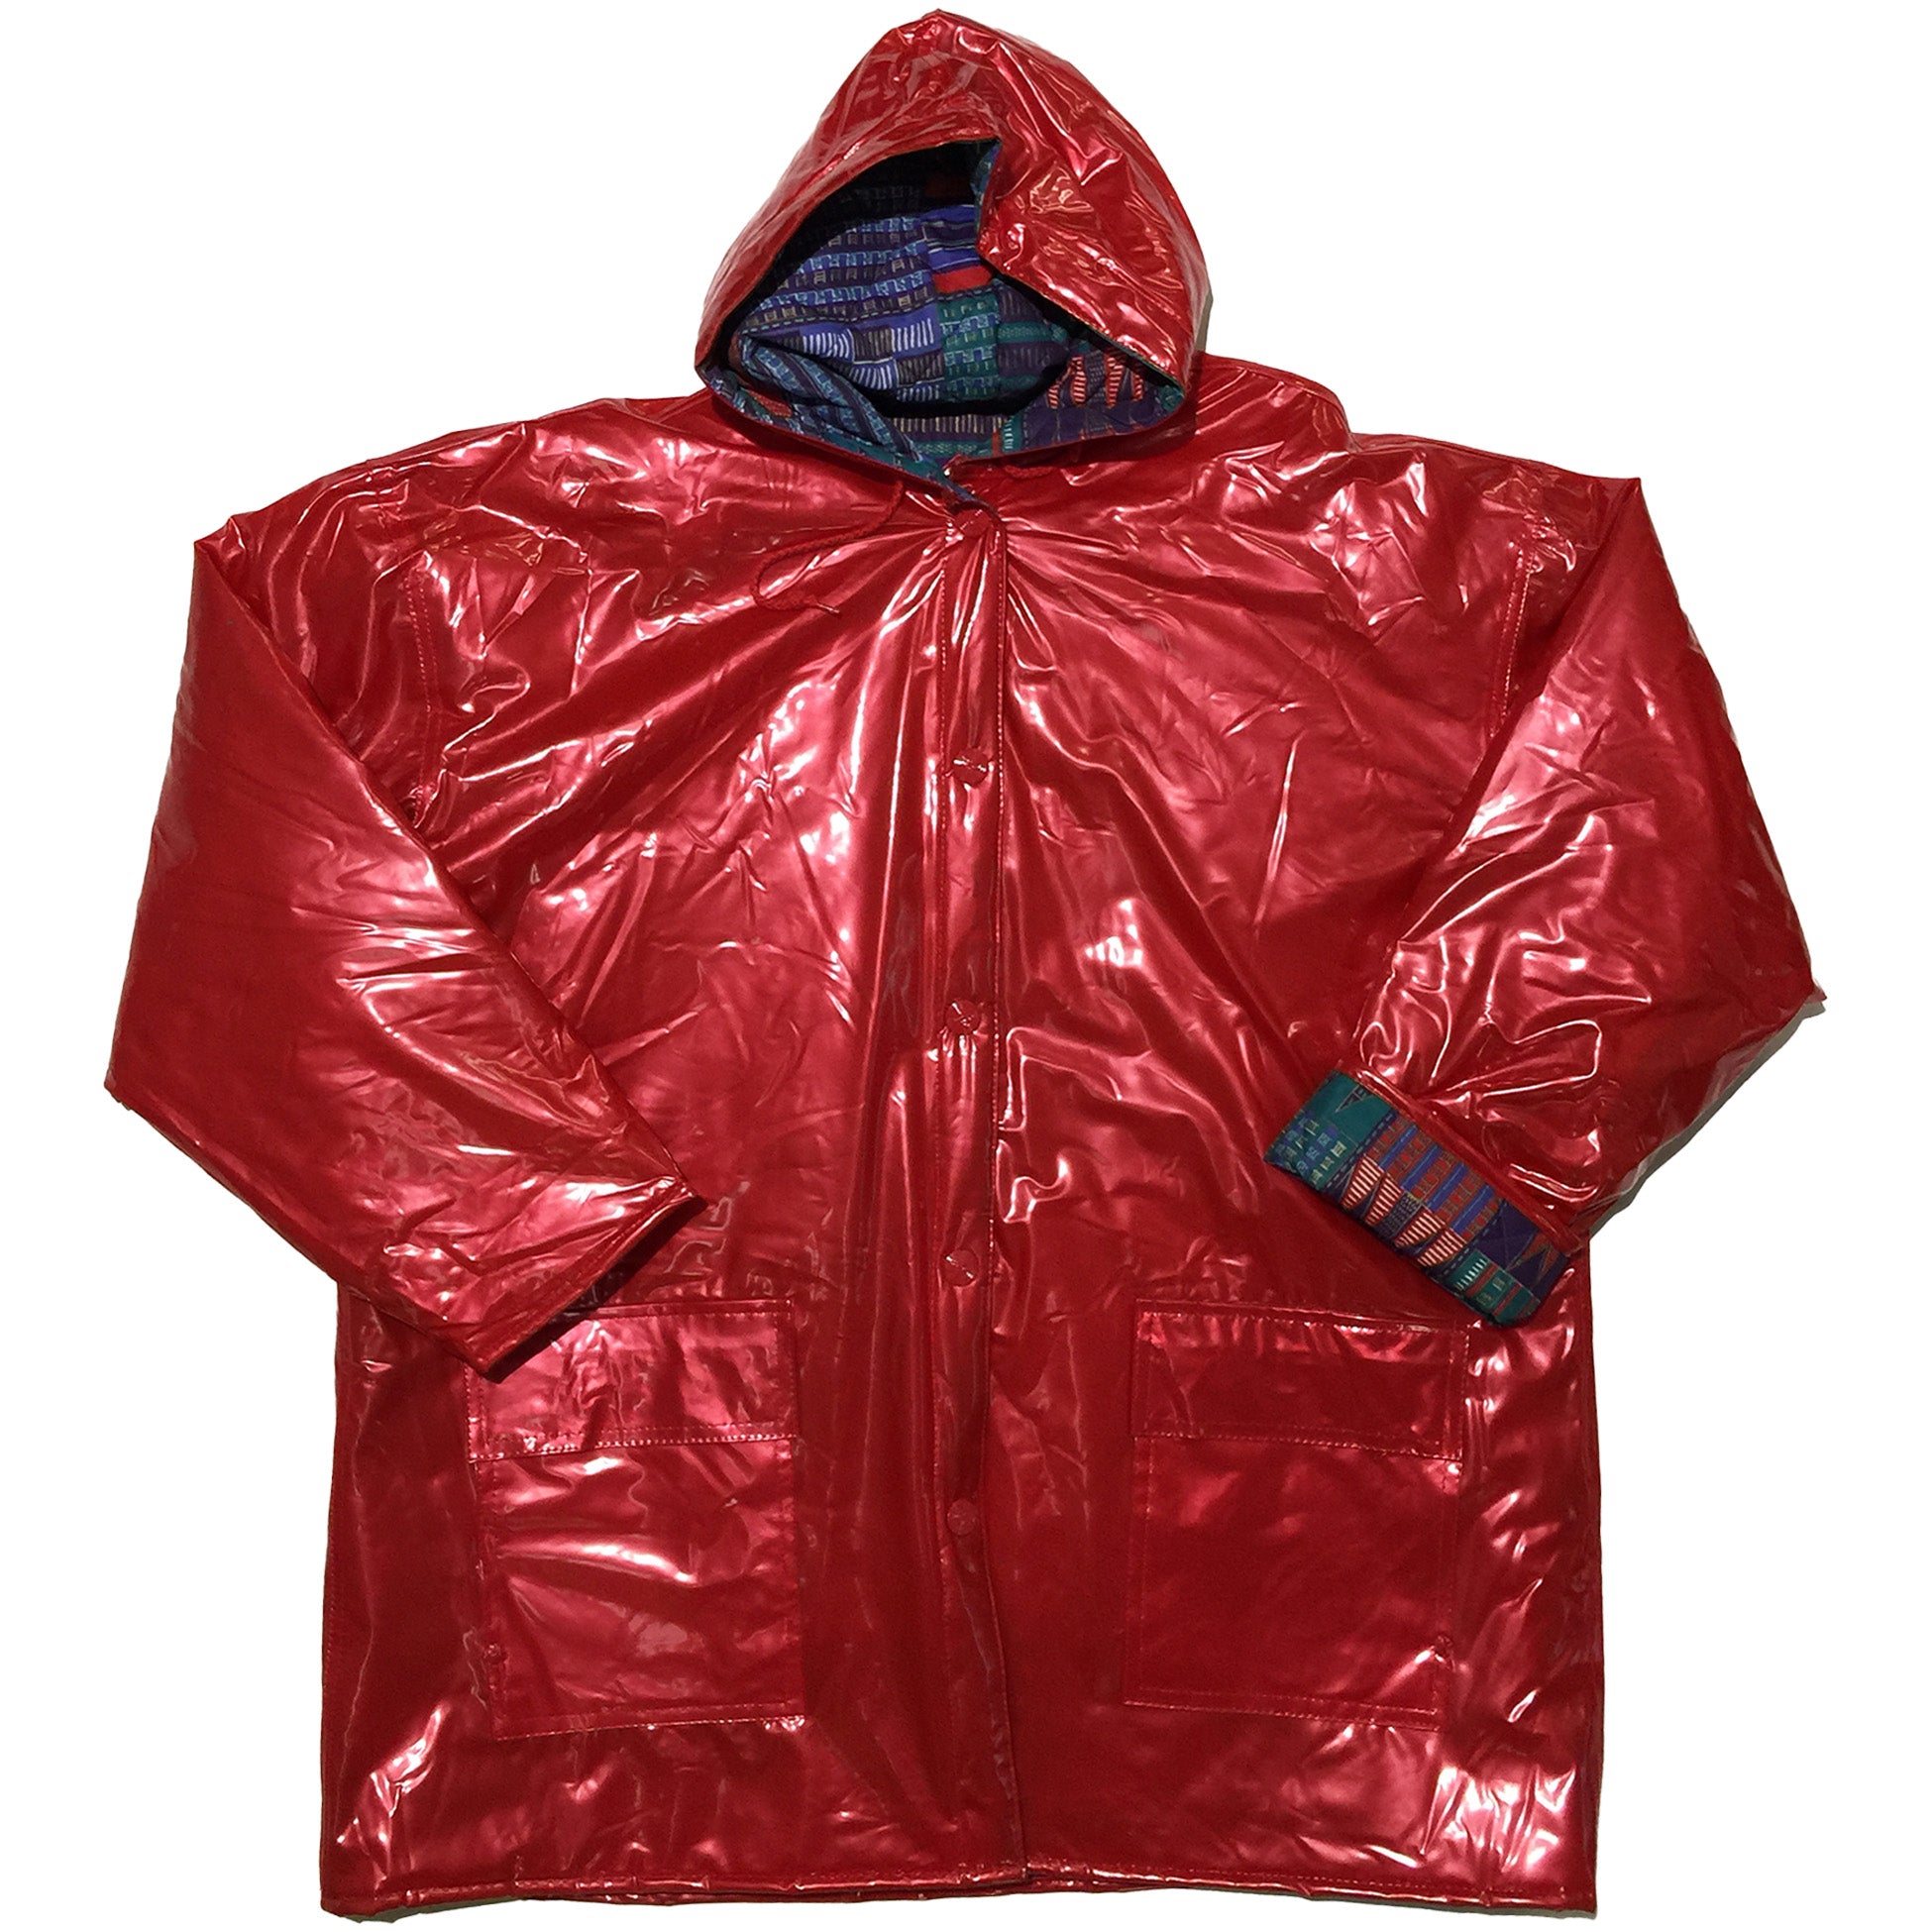 Keiw Sporn Red Plastic Jacket